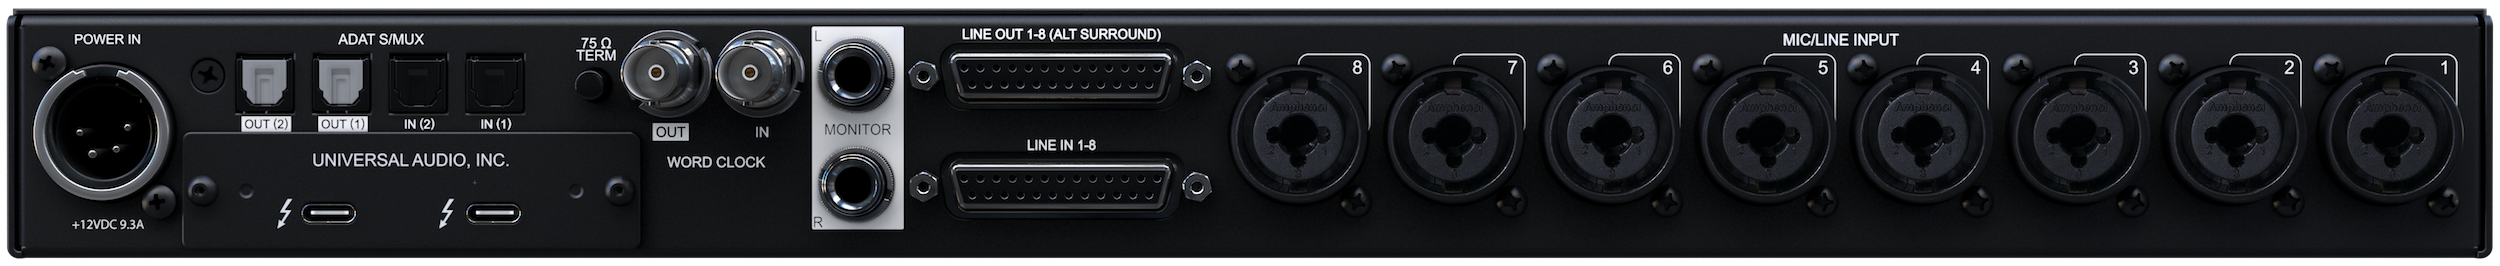 Universal Audio Apollo X8p Heritage Edition - Interface de audio thunderbolt - Variation 1